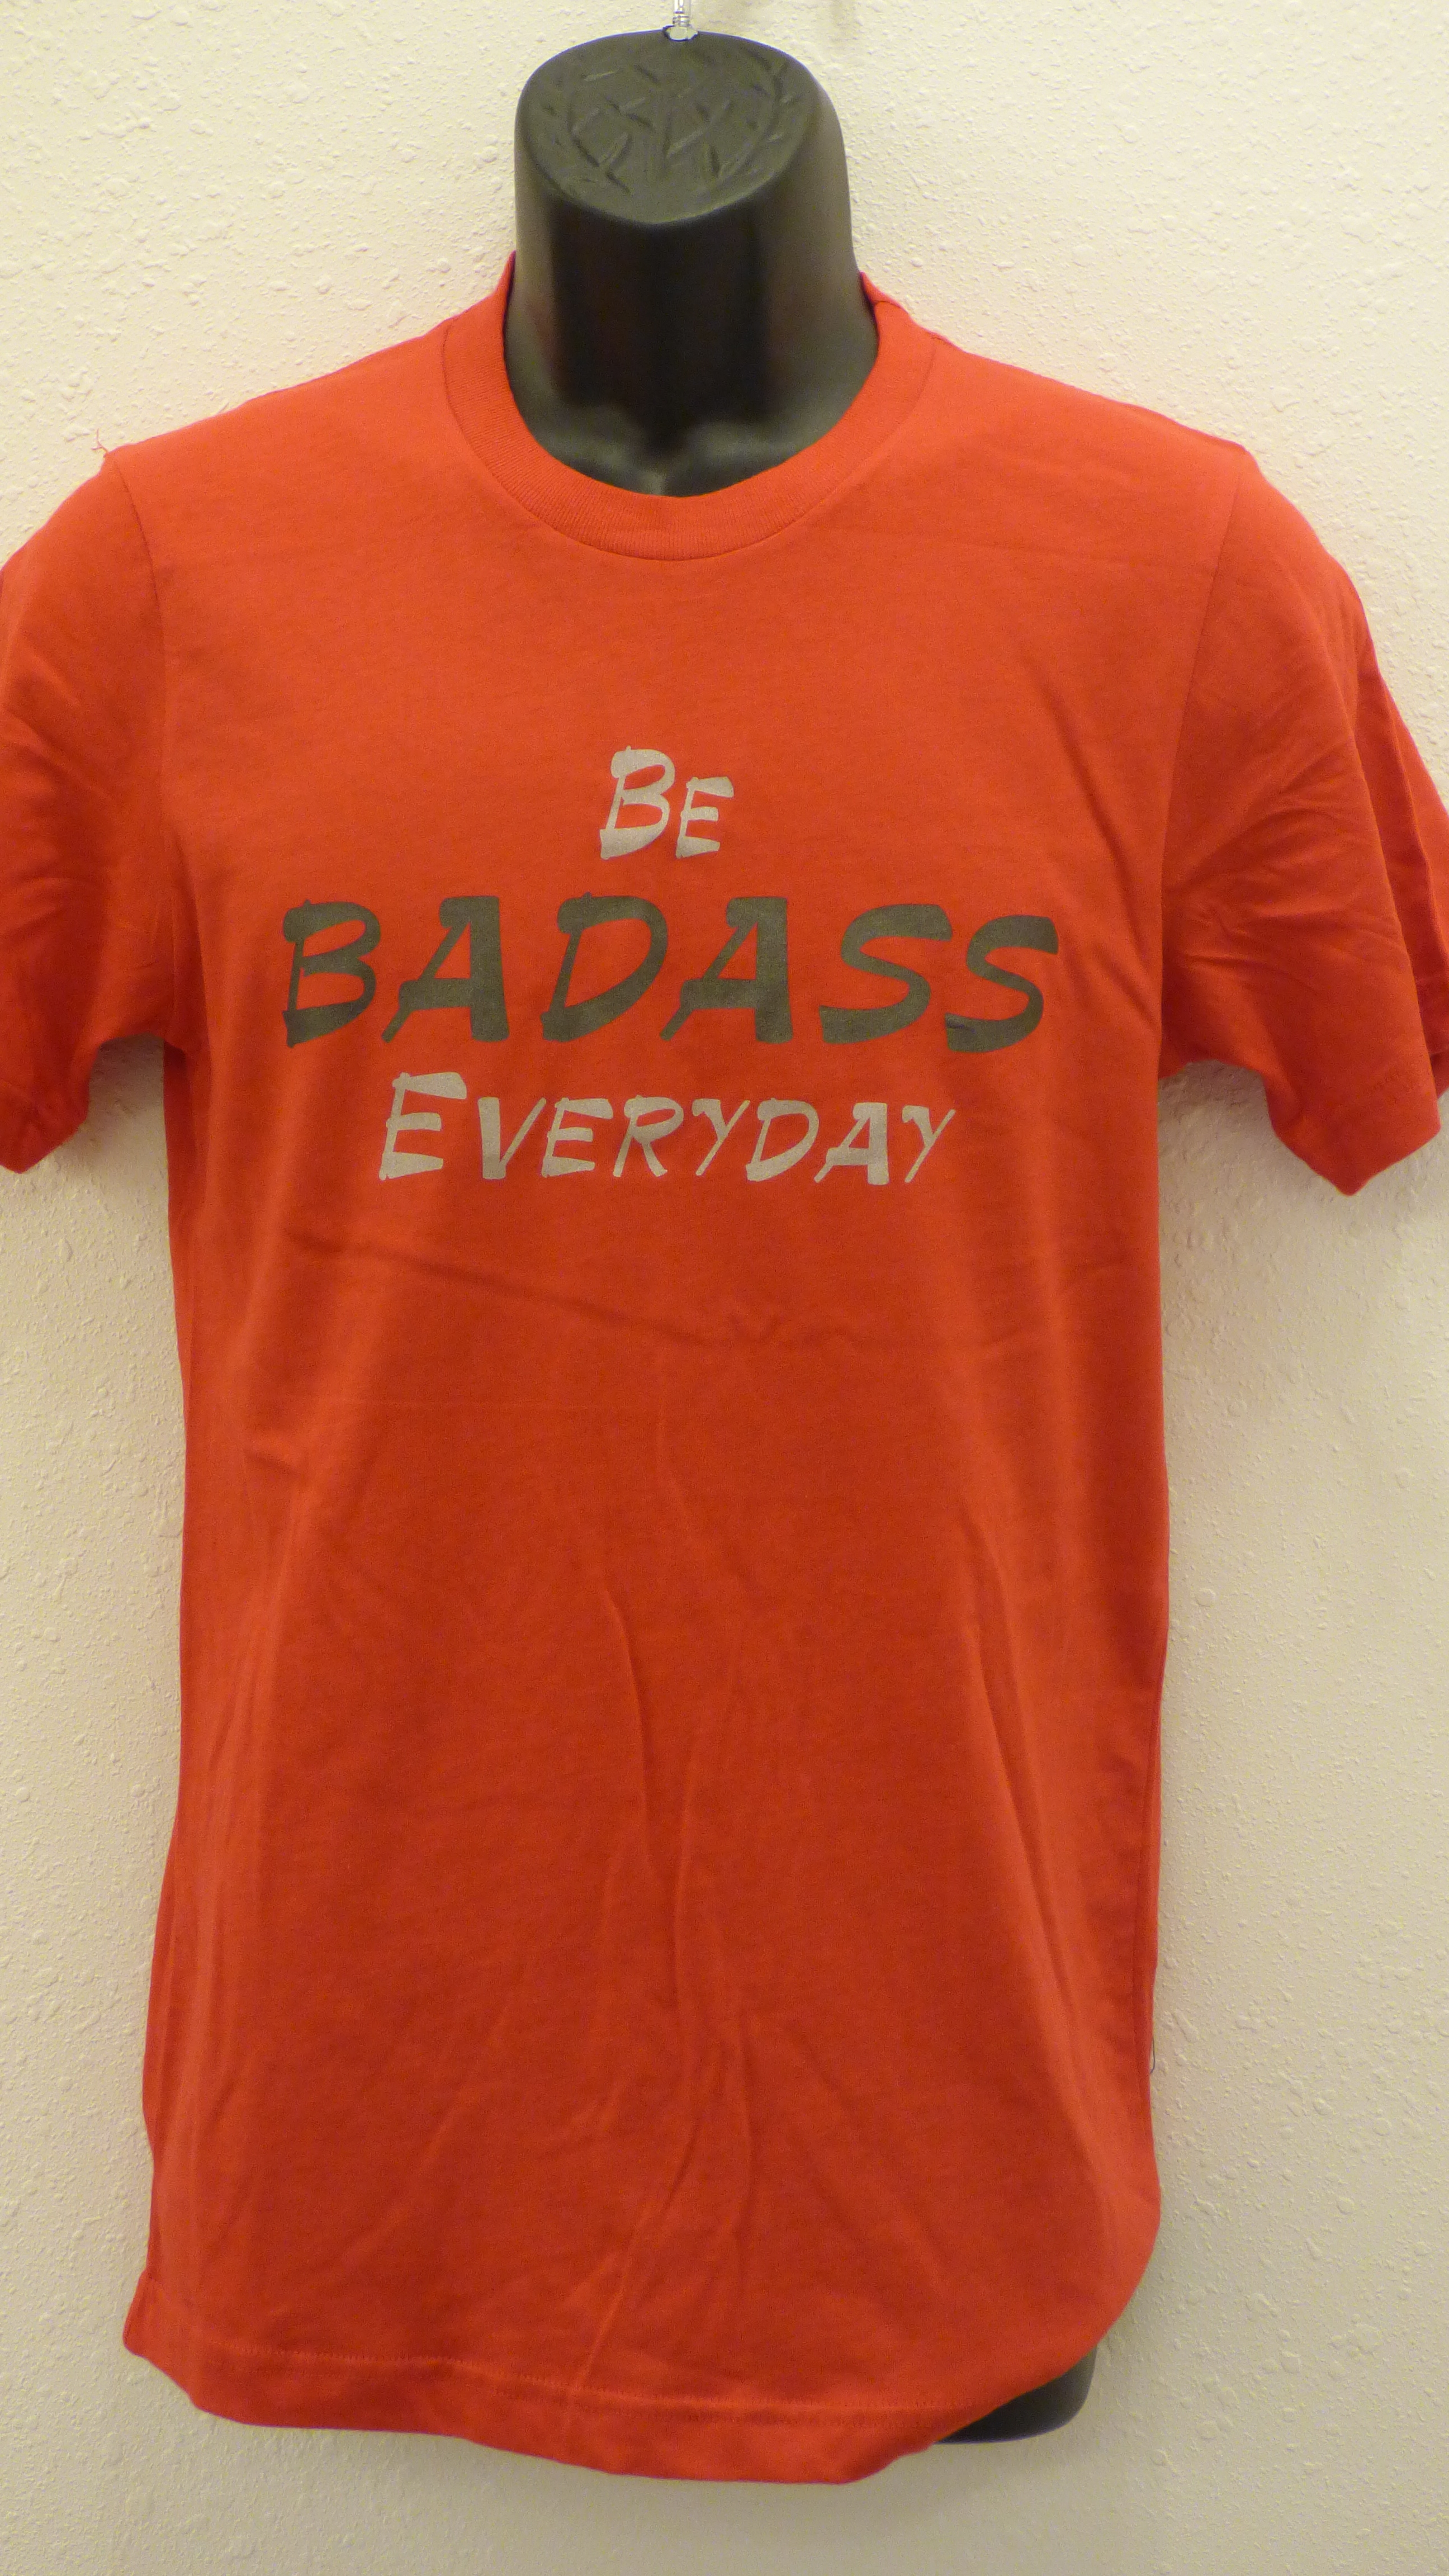 Men's 'Be Badass Everyday' t-shirt